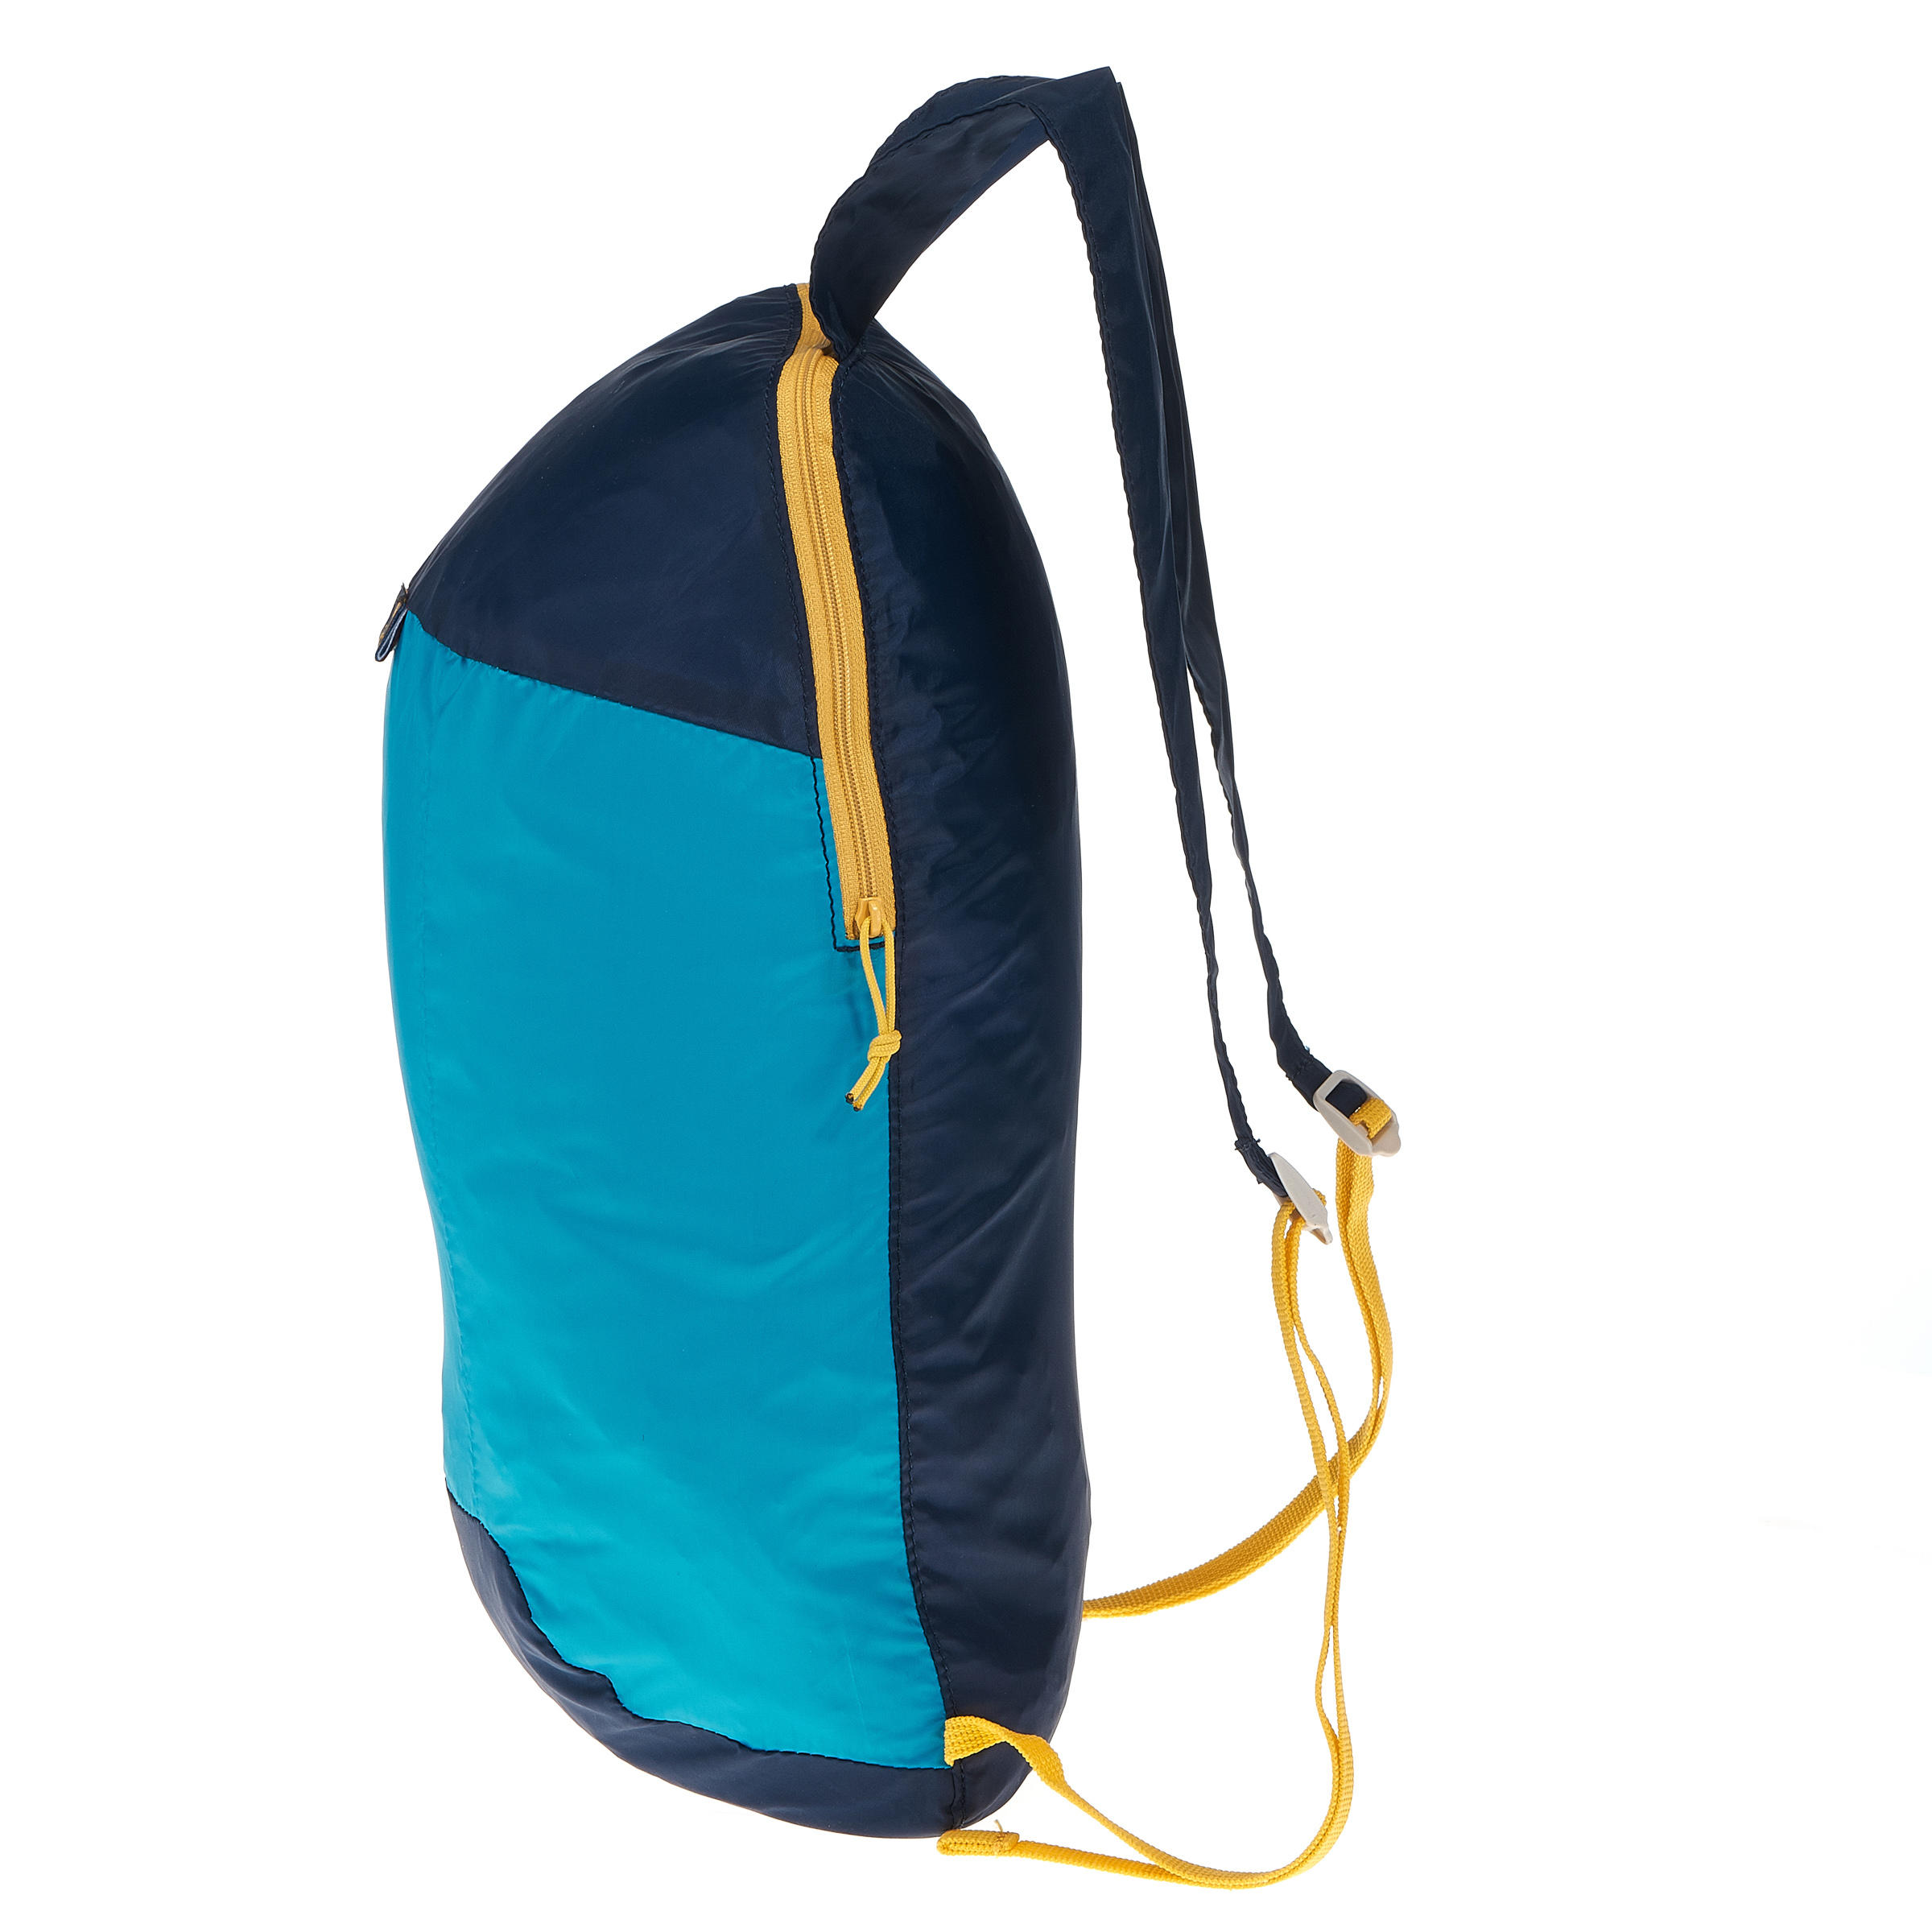 decathlon ultra compact backpack